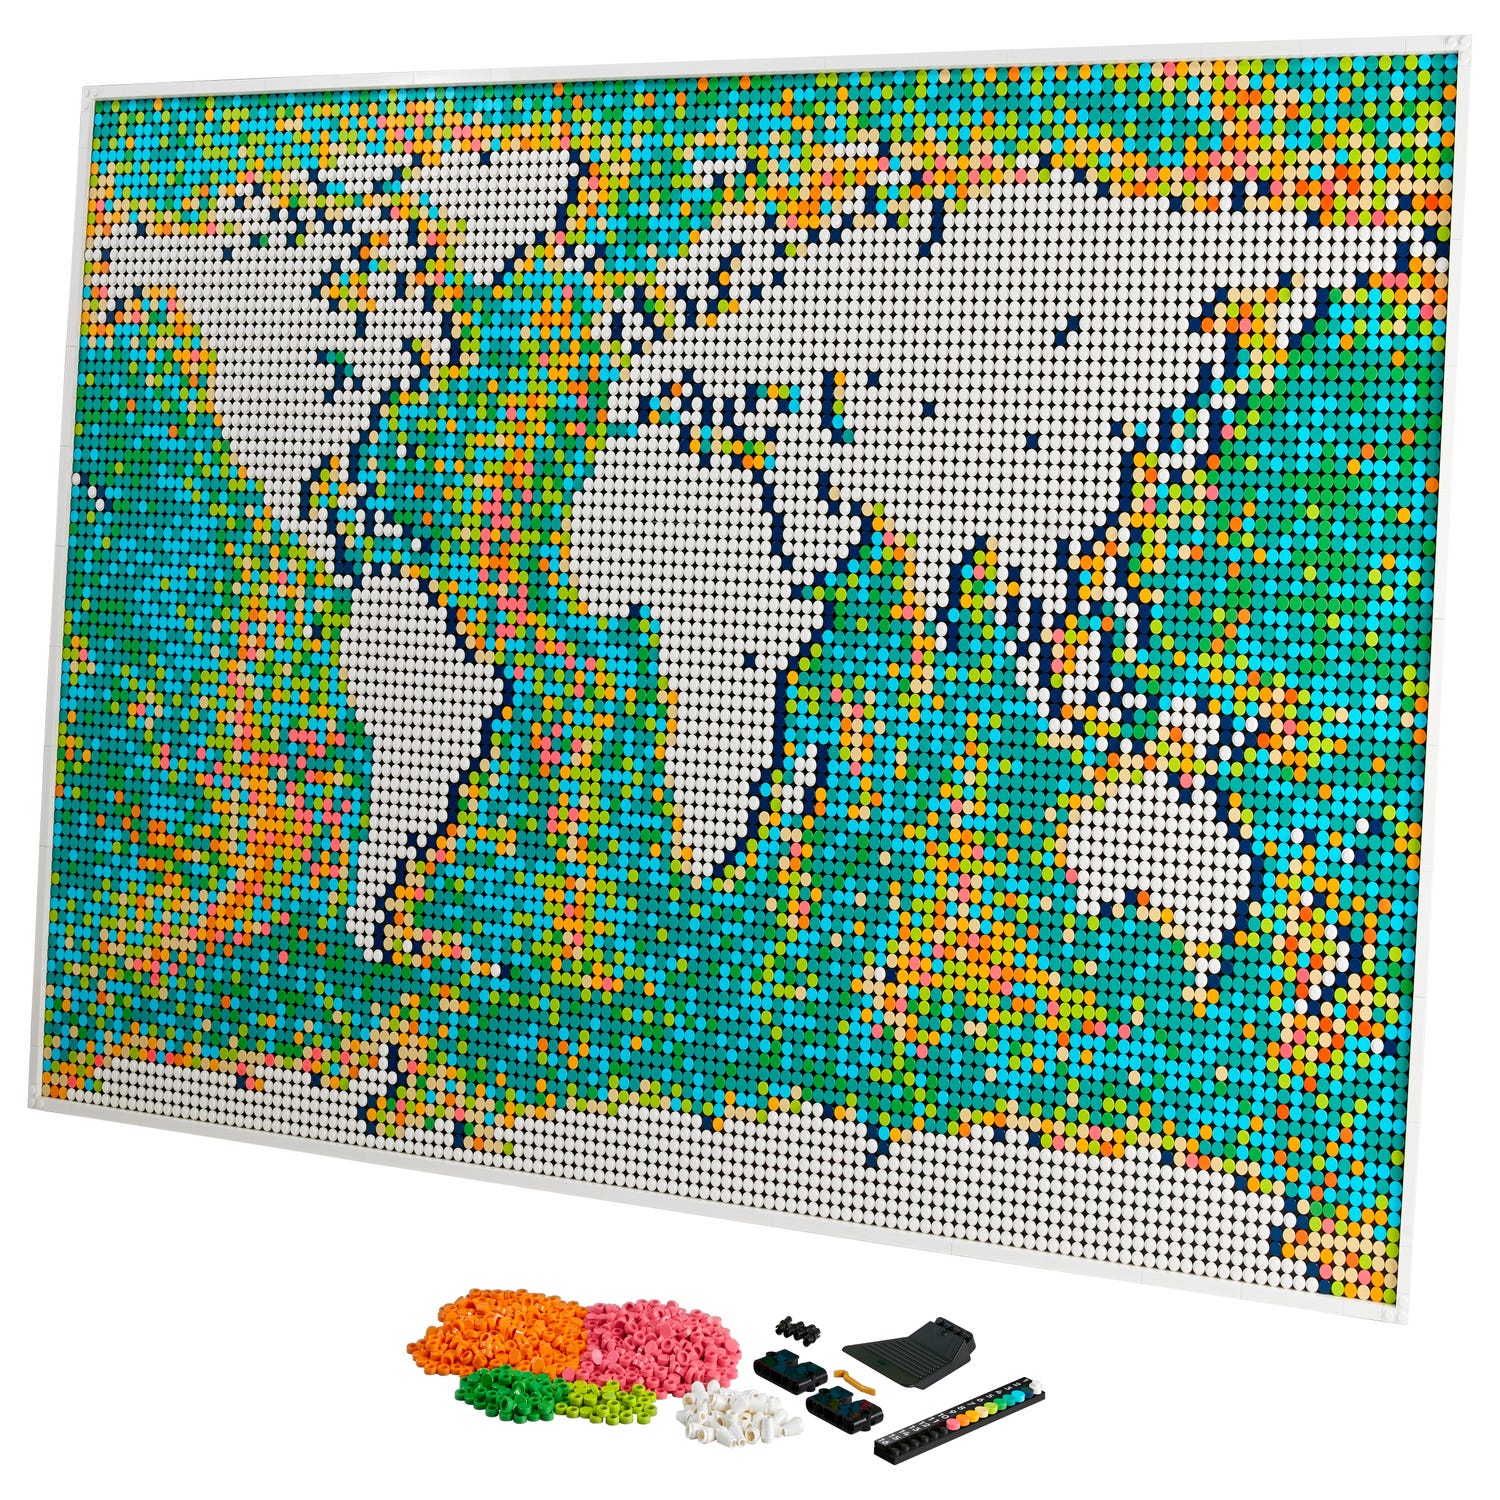 LEGO Art World Map  LEGO Designer Video 31203 